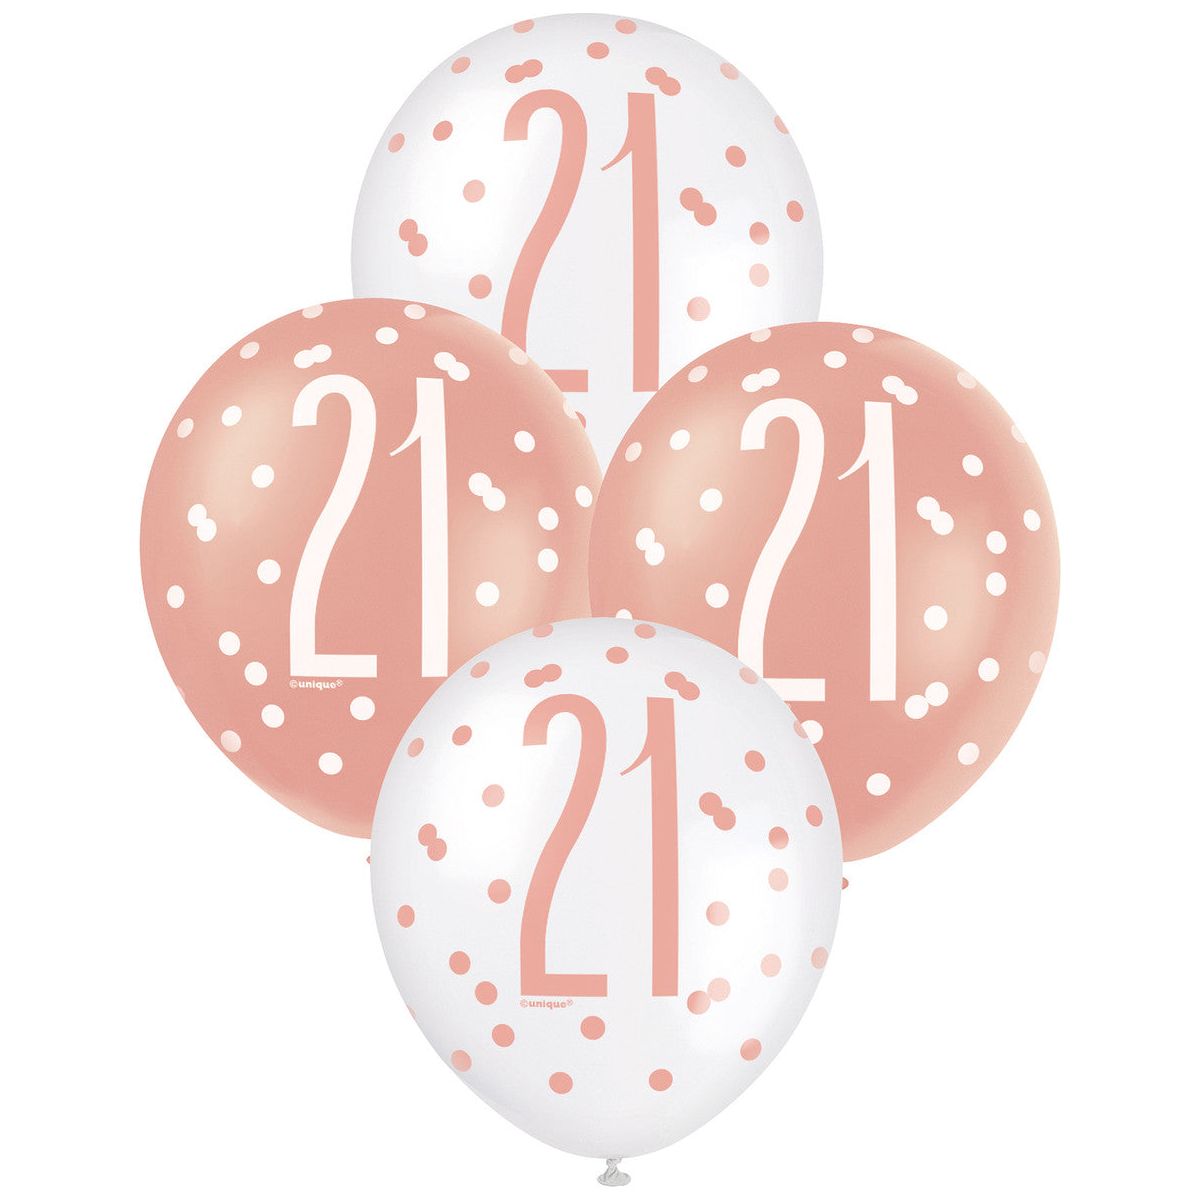 Rose Gold & White 21st Birthday Latex Balloons - Dollars and Sense